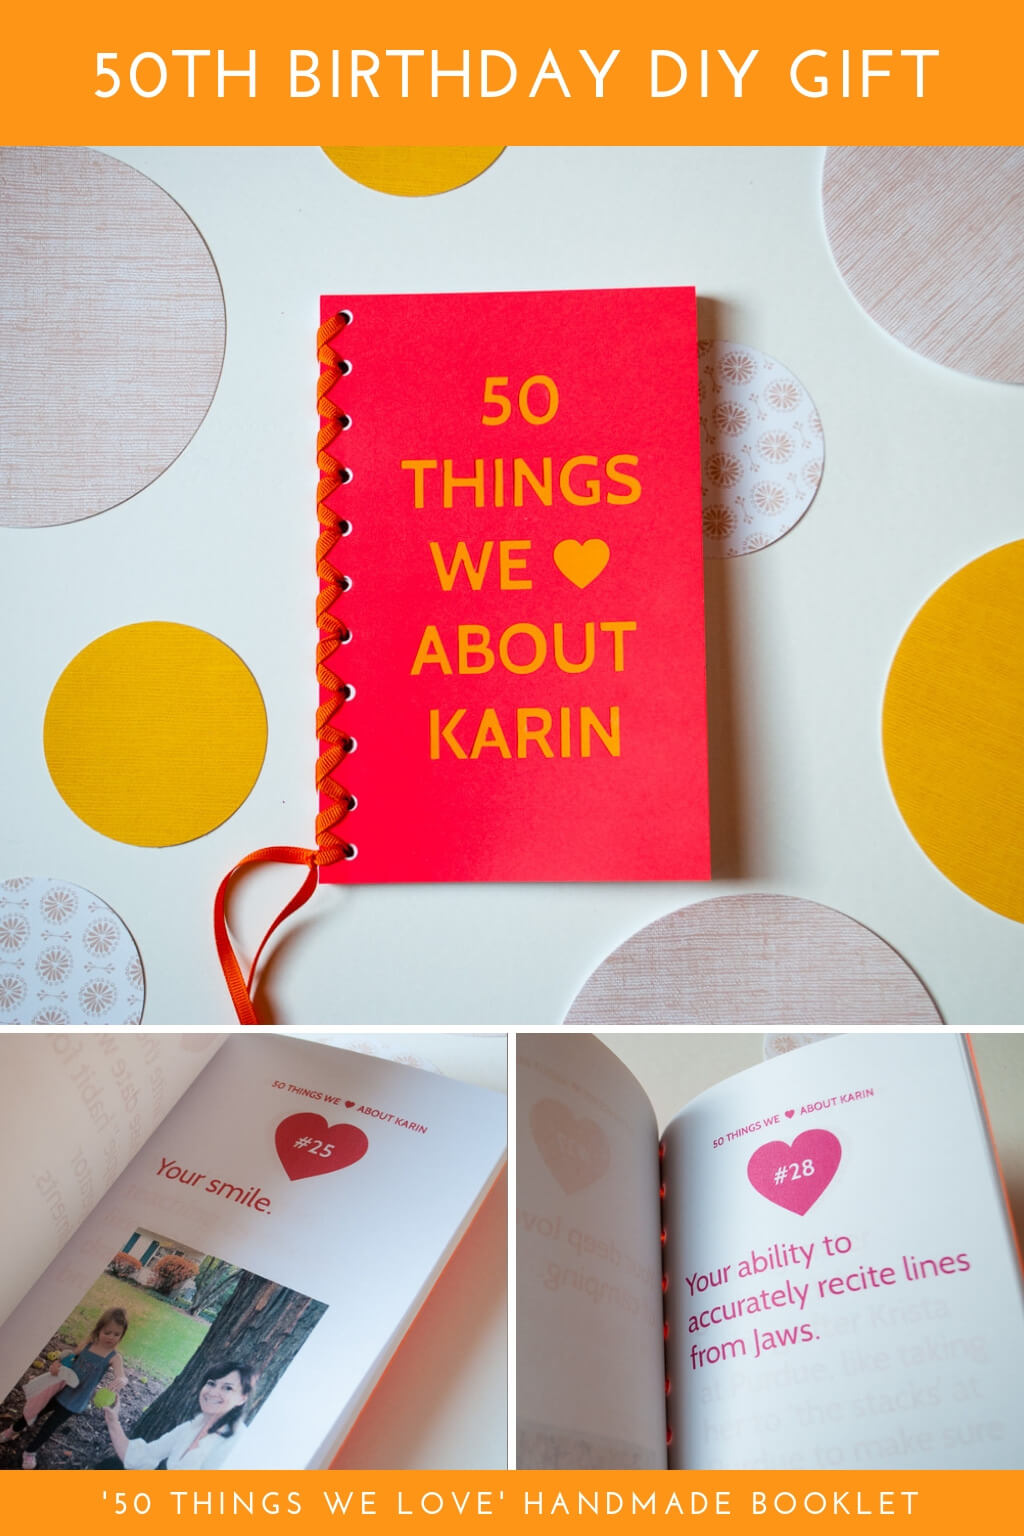 50th birthday handmade book gift ideas